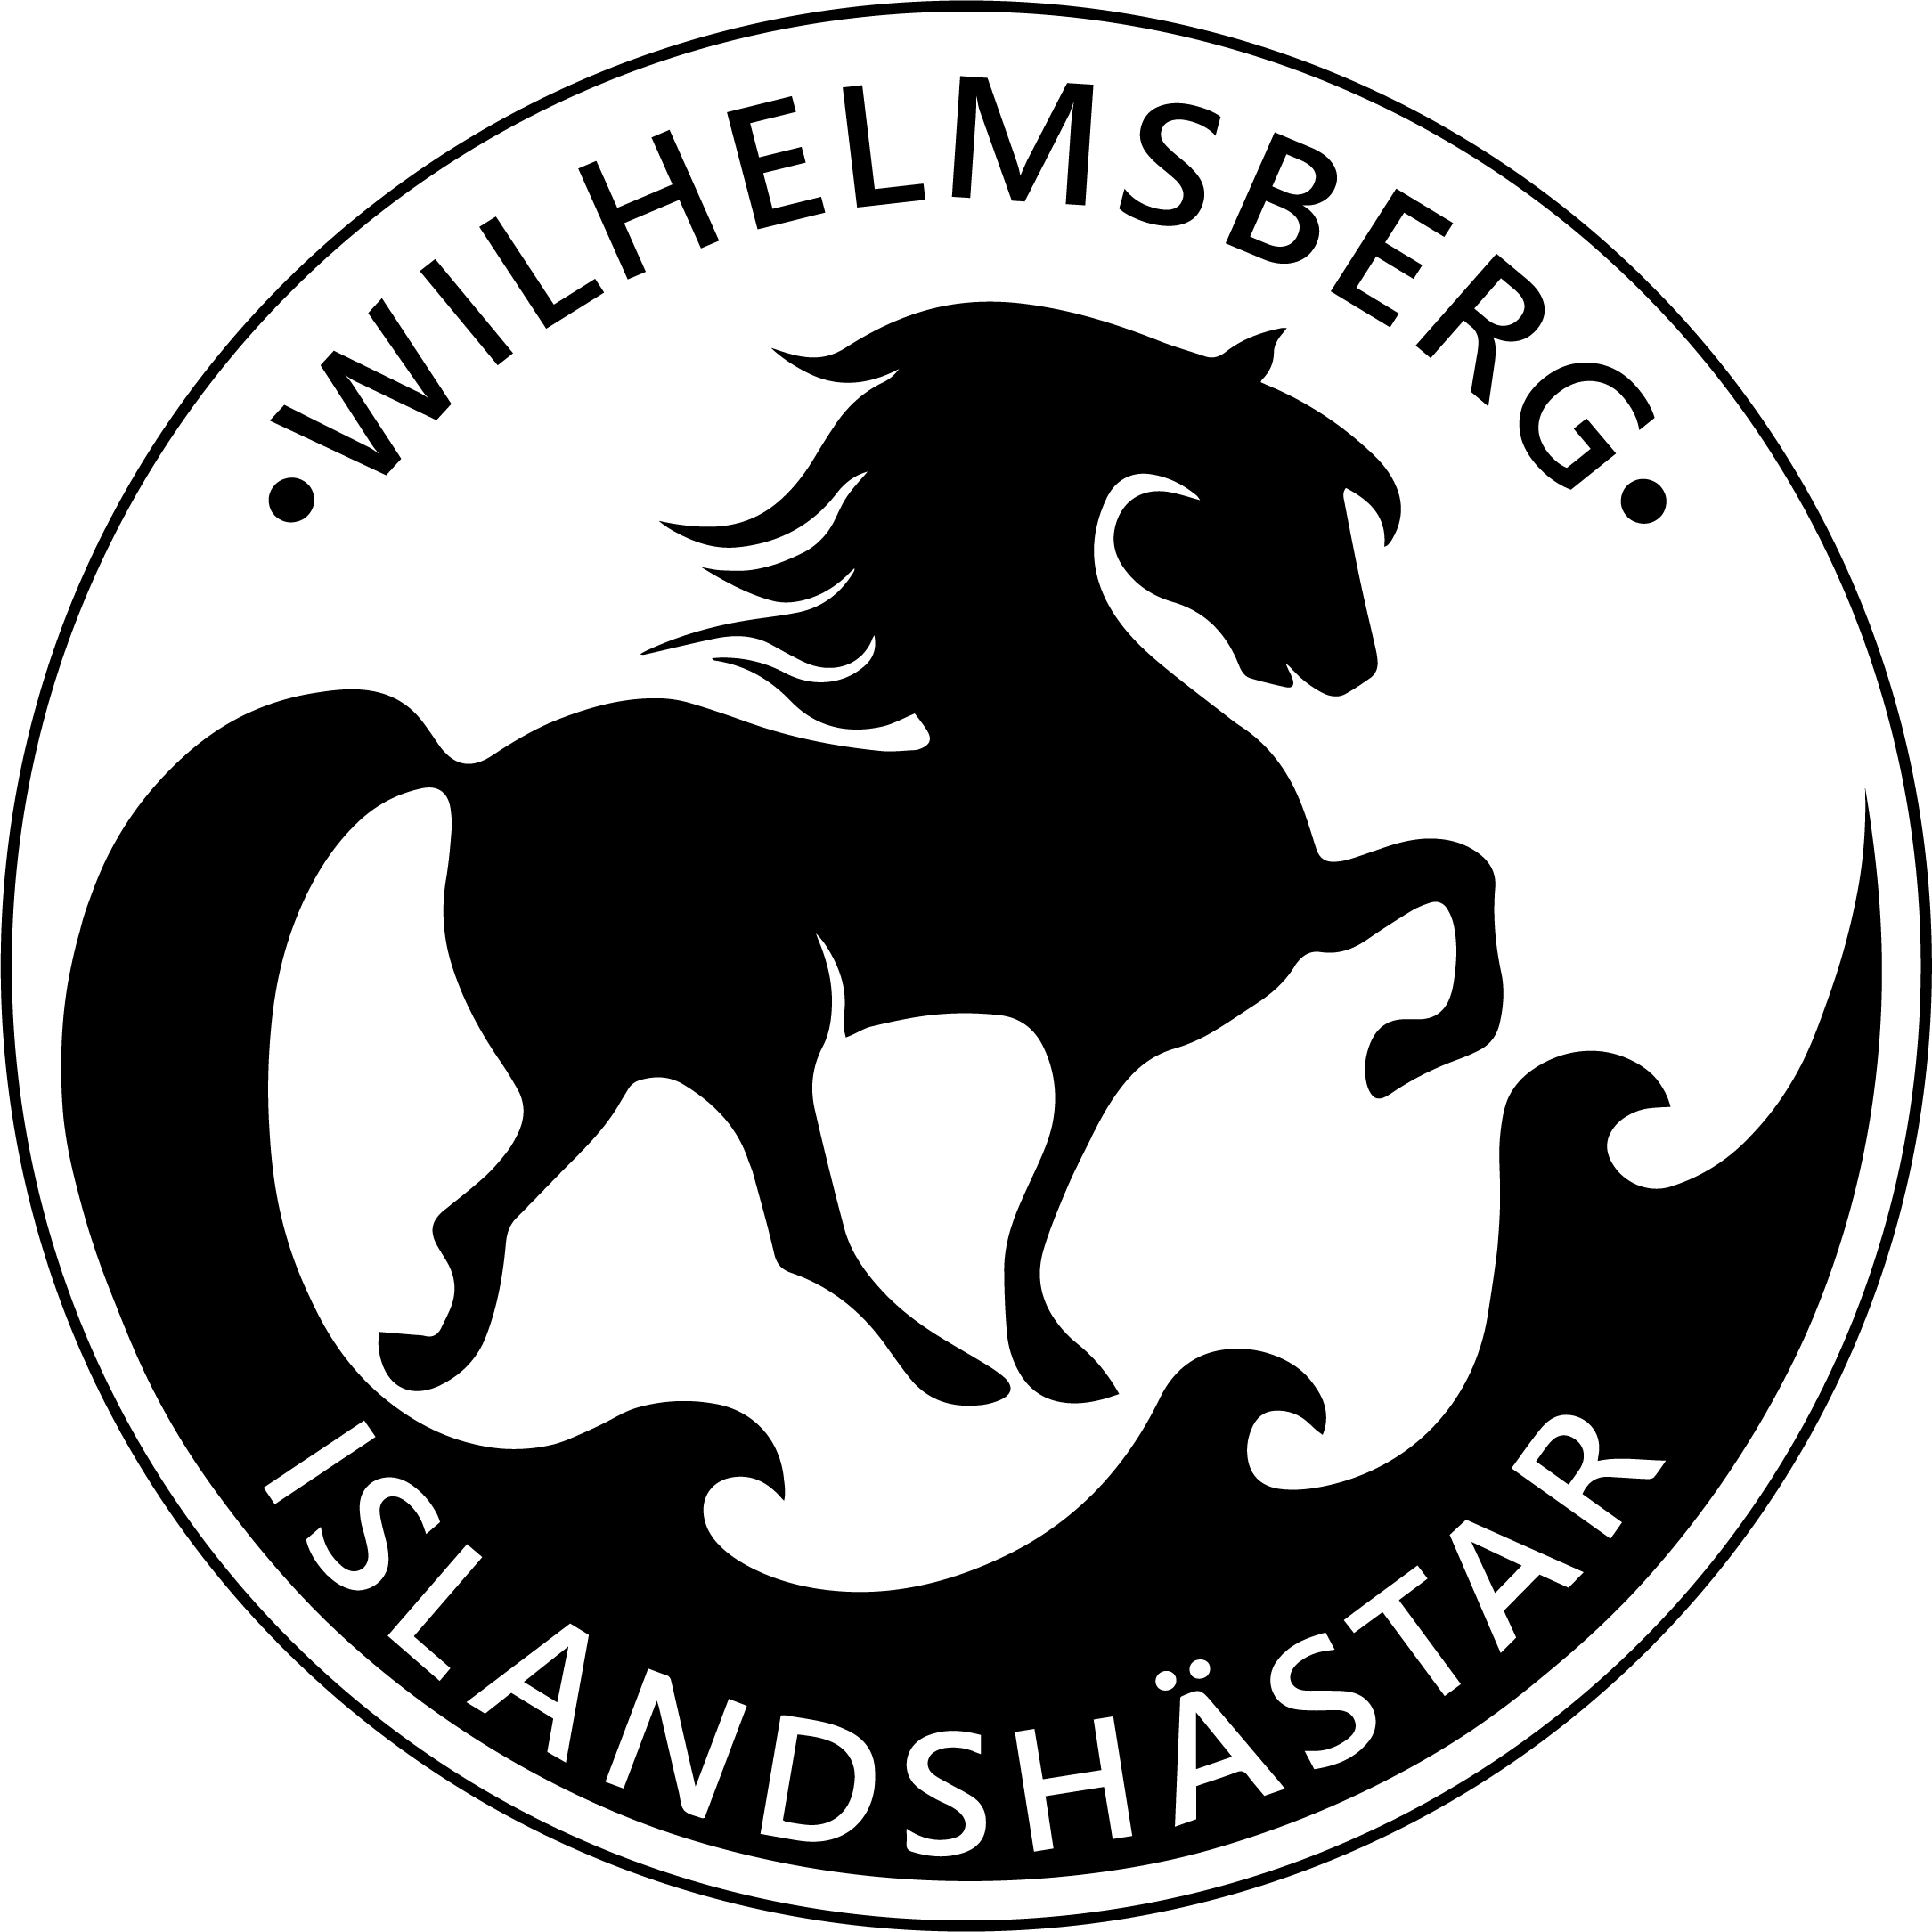 Wilhelmsberg